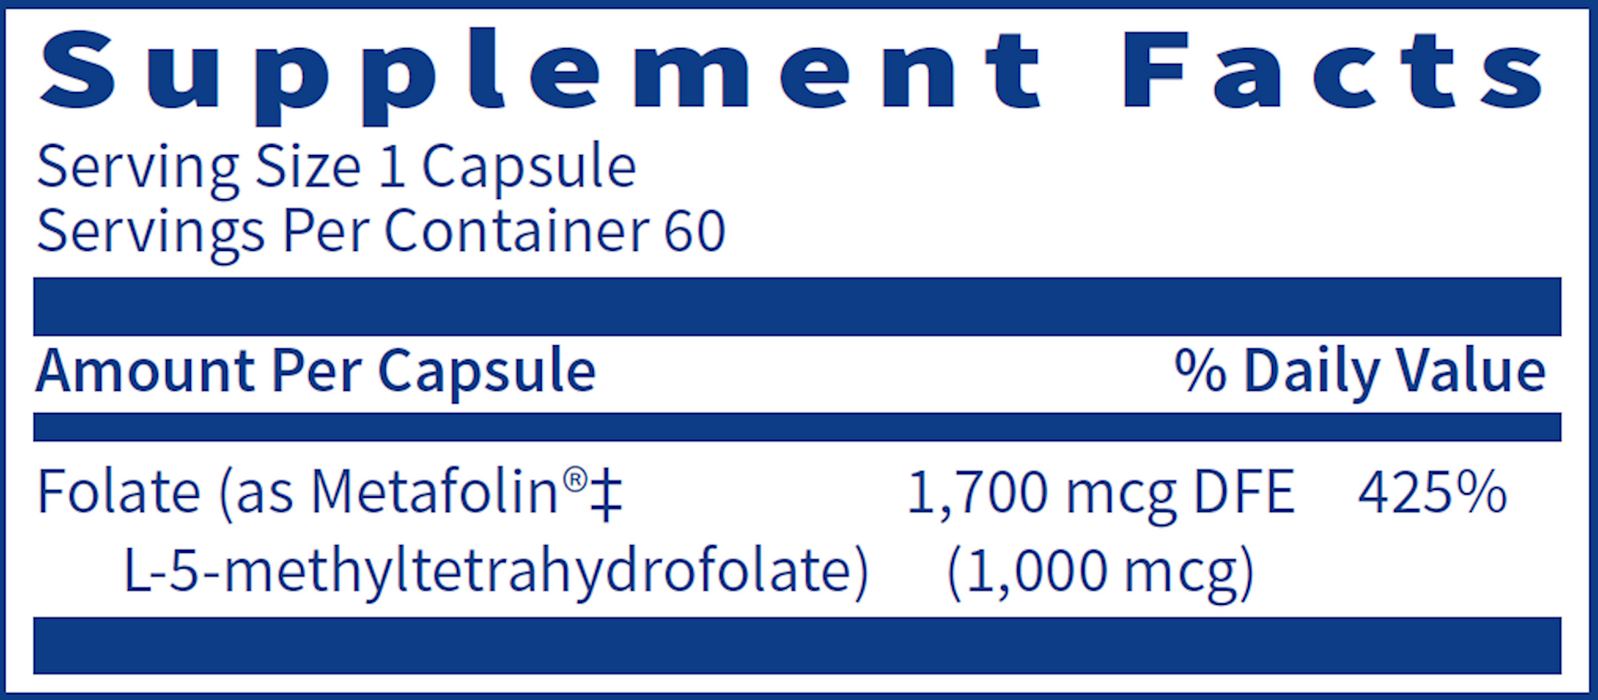 L-MethylFolate